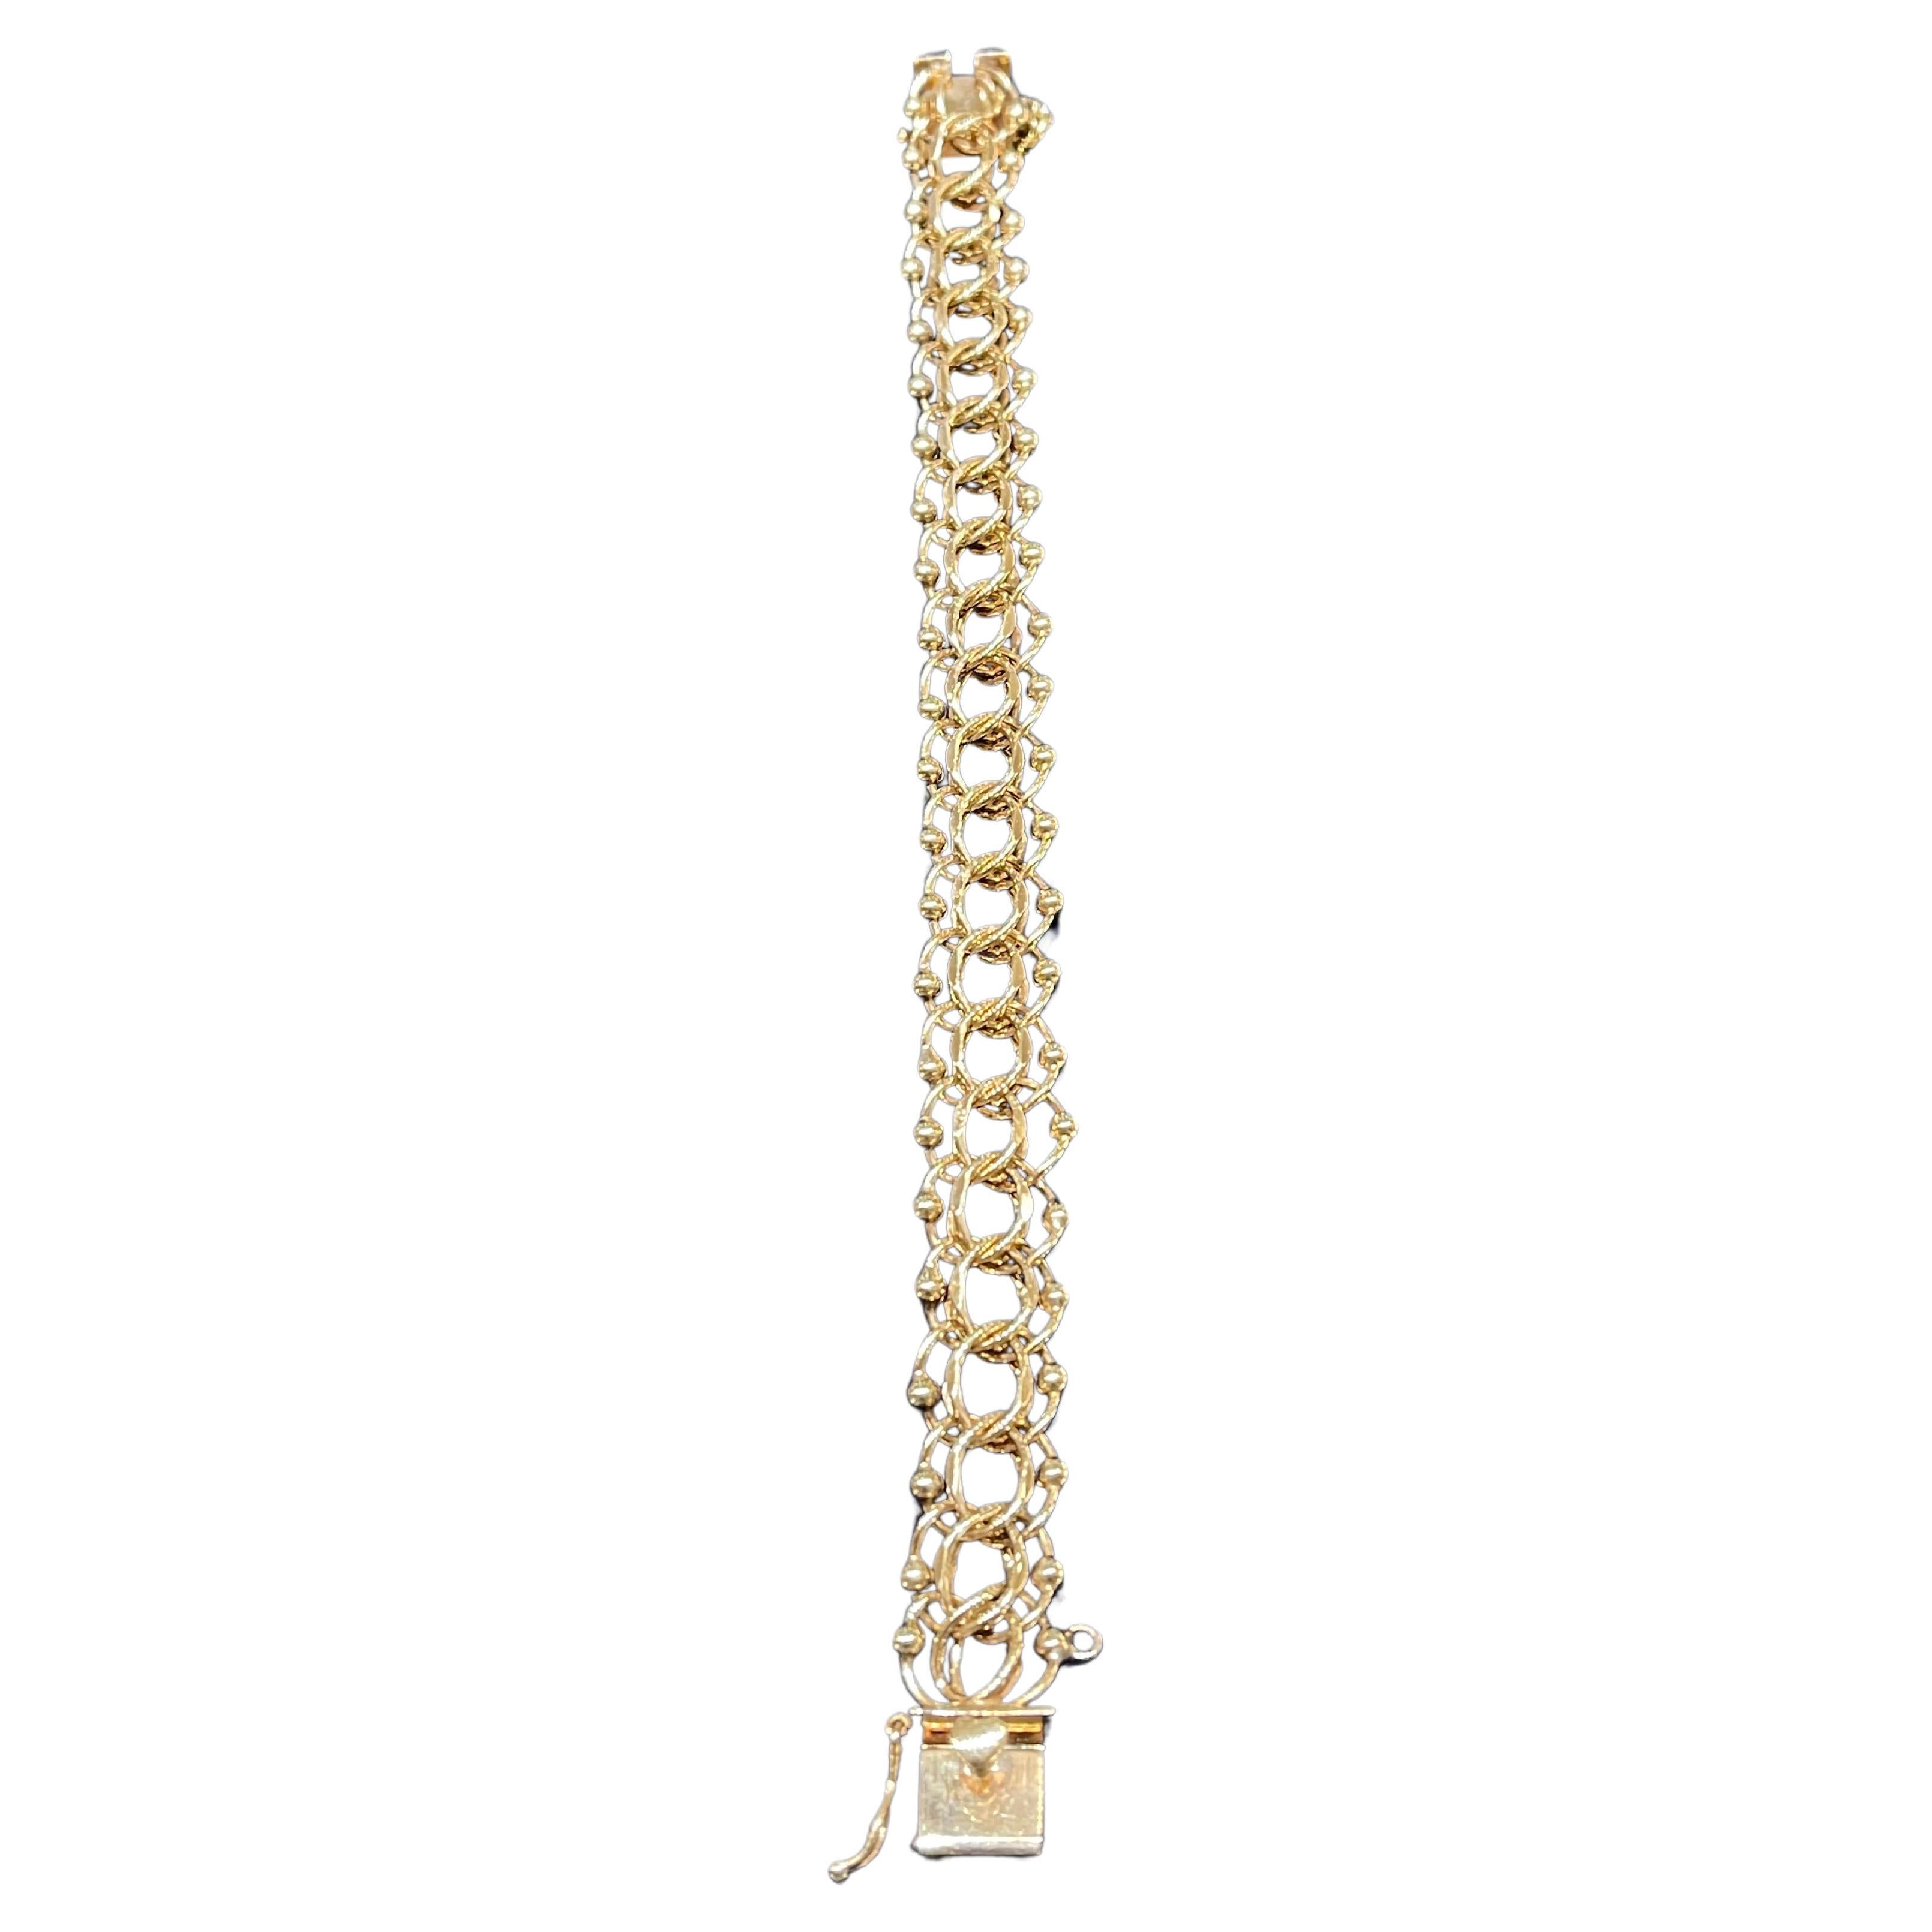 14K Yellow Gold Heart Lock Key Chain Charm Bracelet 7.5 inch